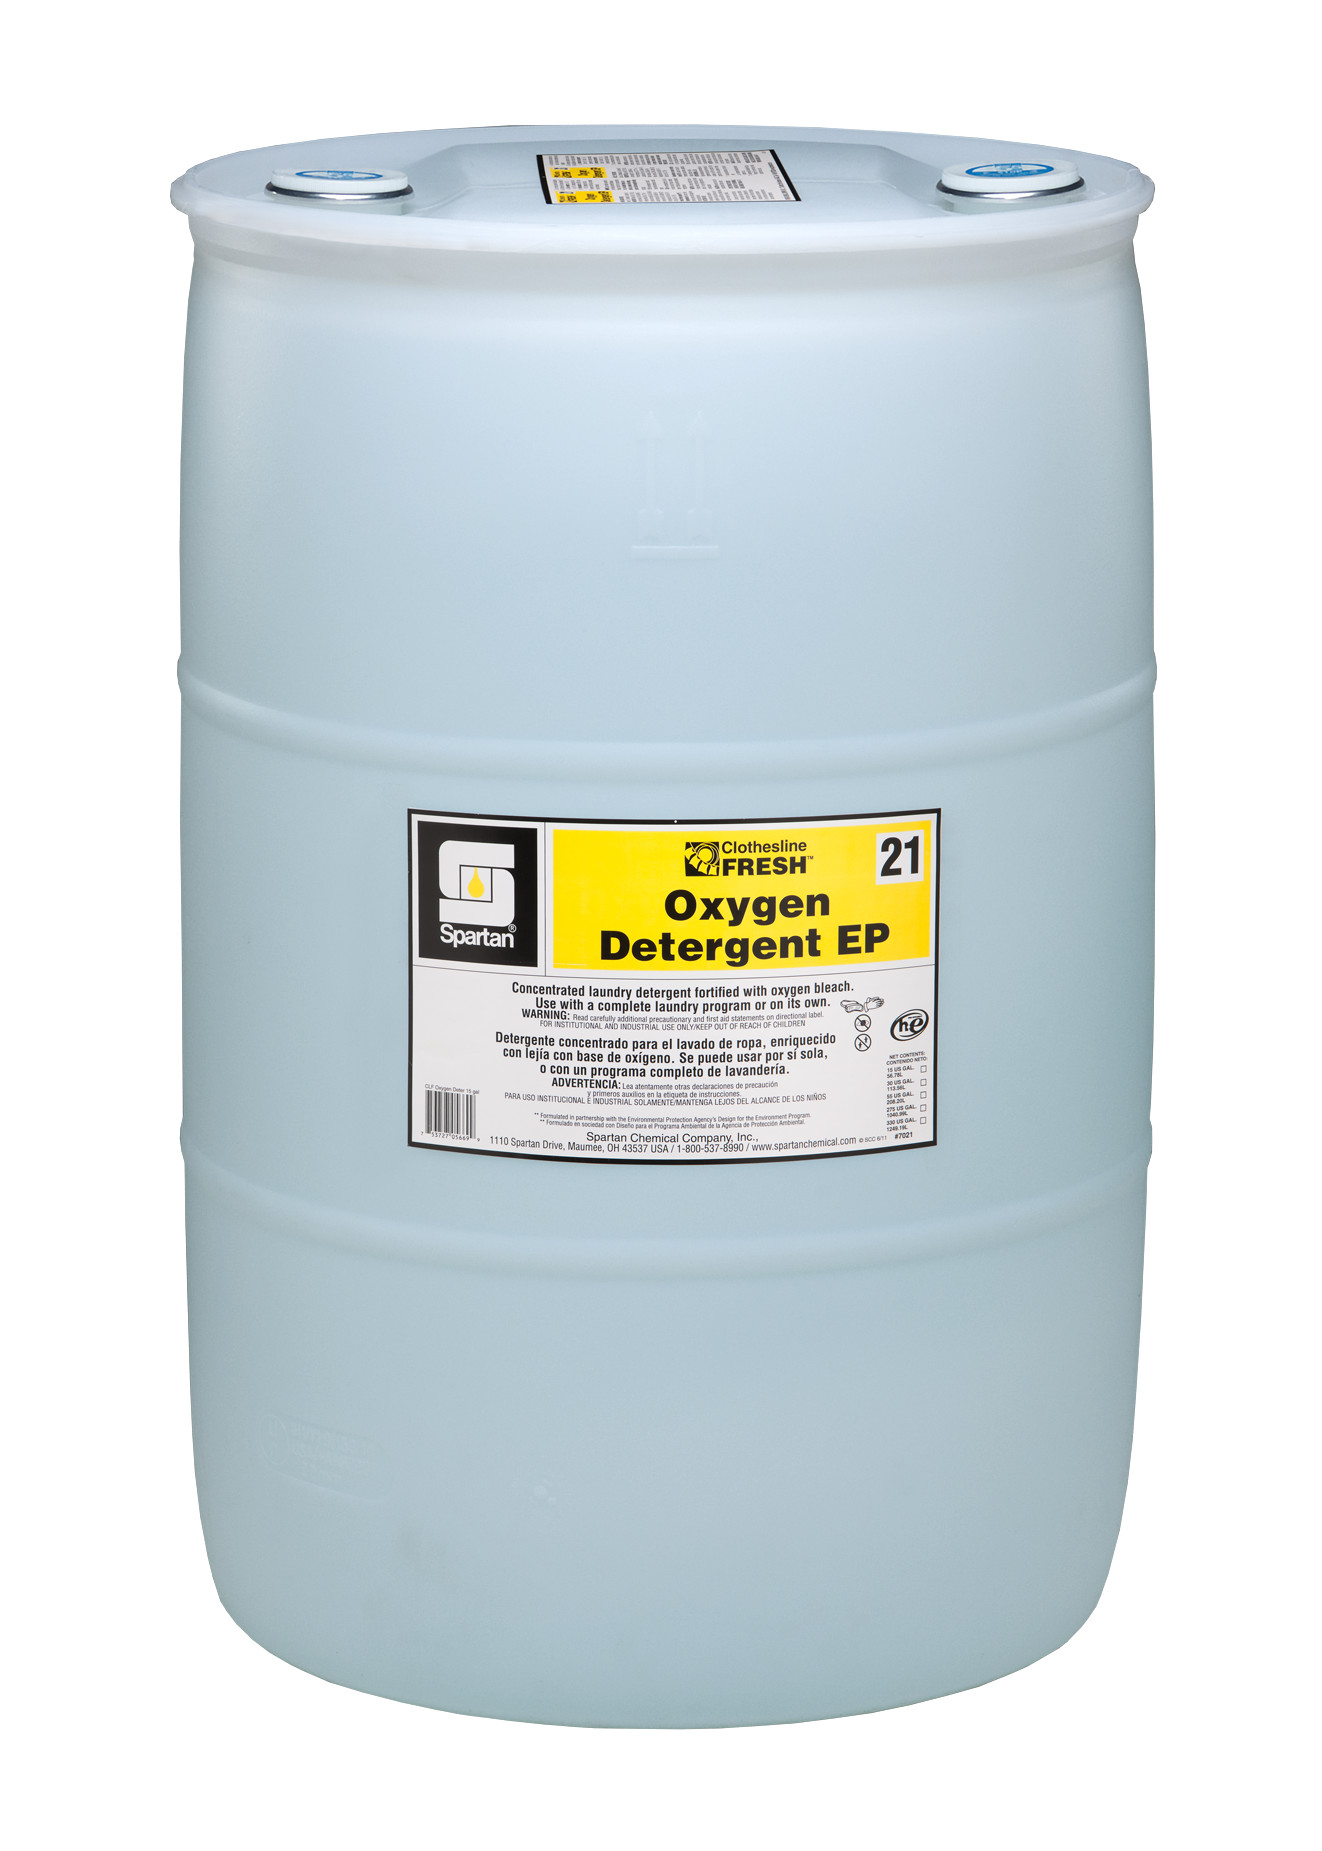 Spartan Chemical Company Clothesline Fresh Oxygen Detergent EP 21, 55 GAL DRUM